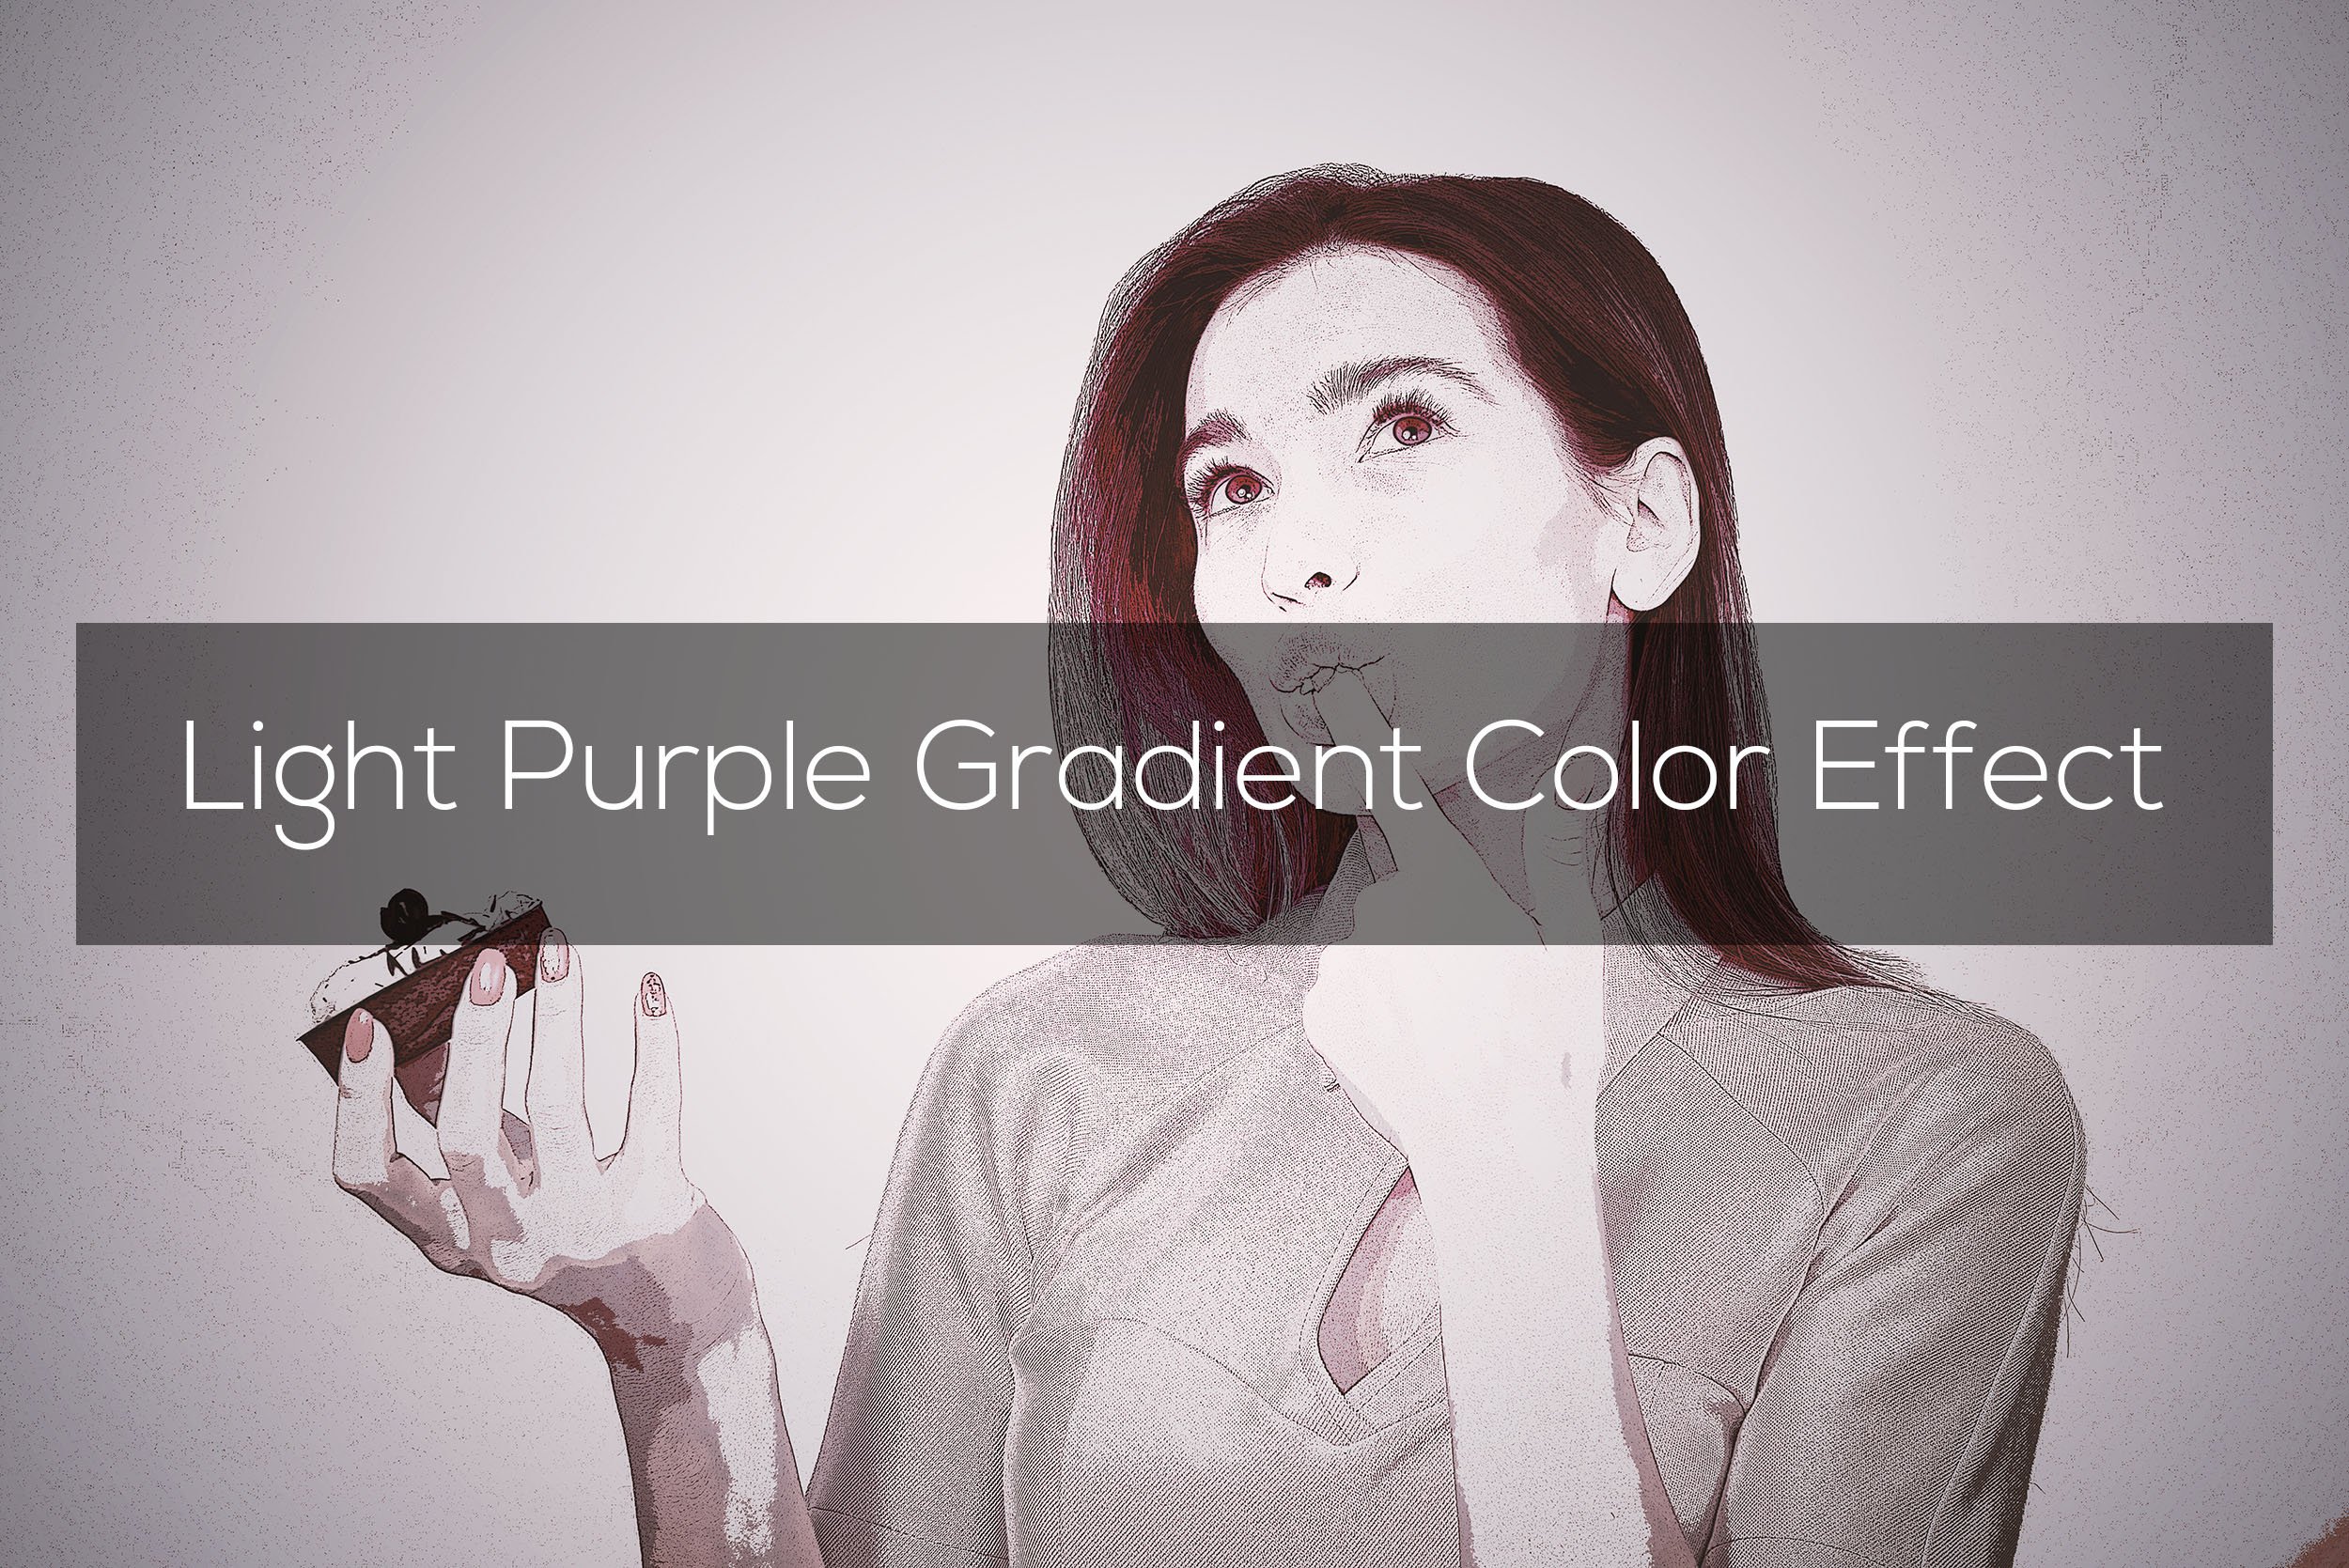 Light Purple Gradient Color Effectcover image.